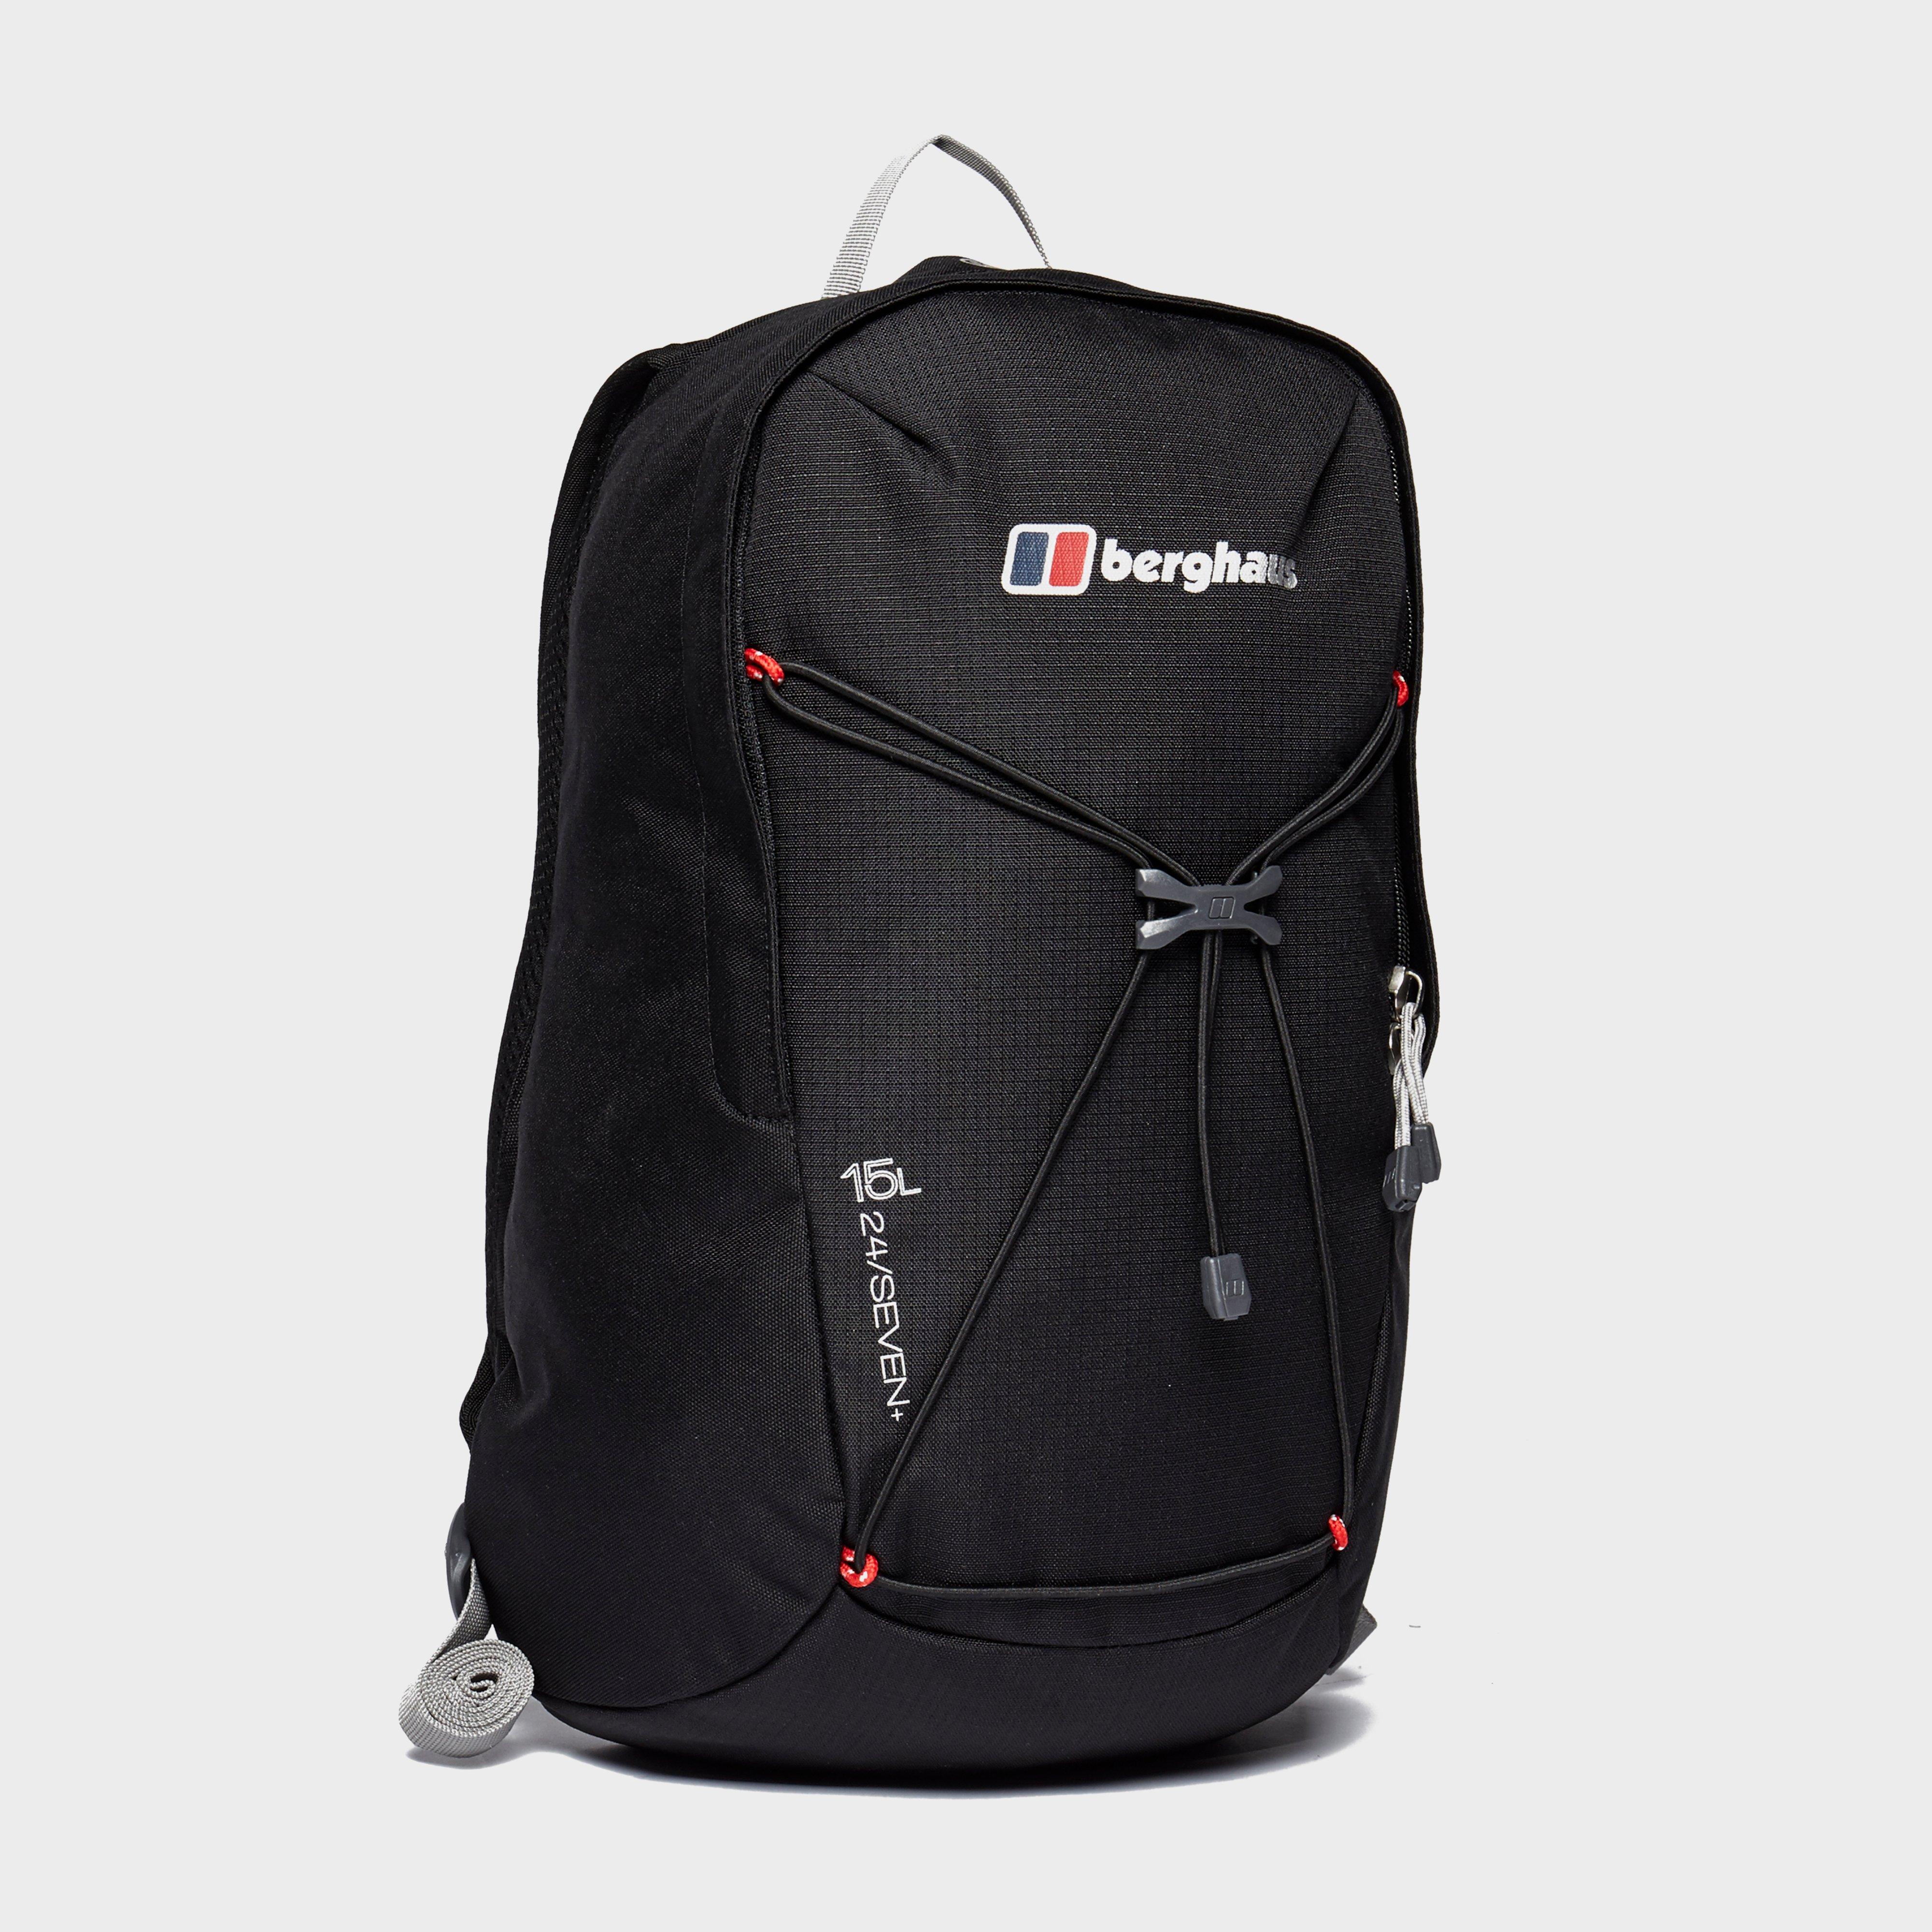  Berghaus TwentyFourSeven 15L Backpack, Black